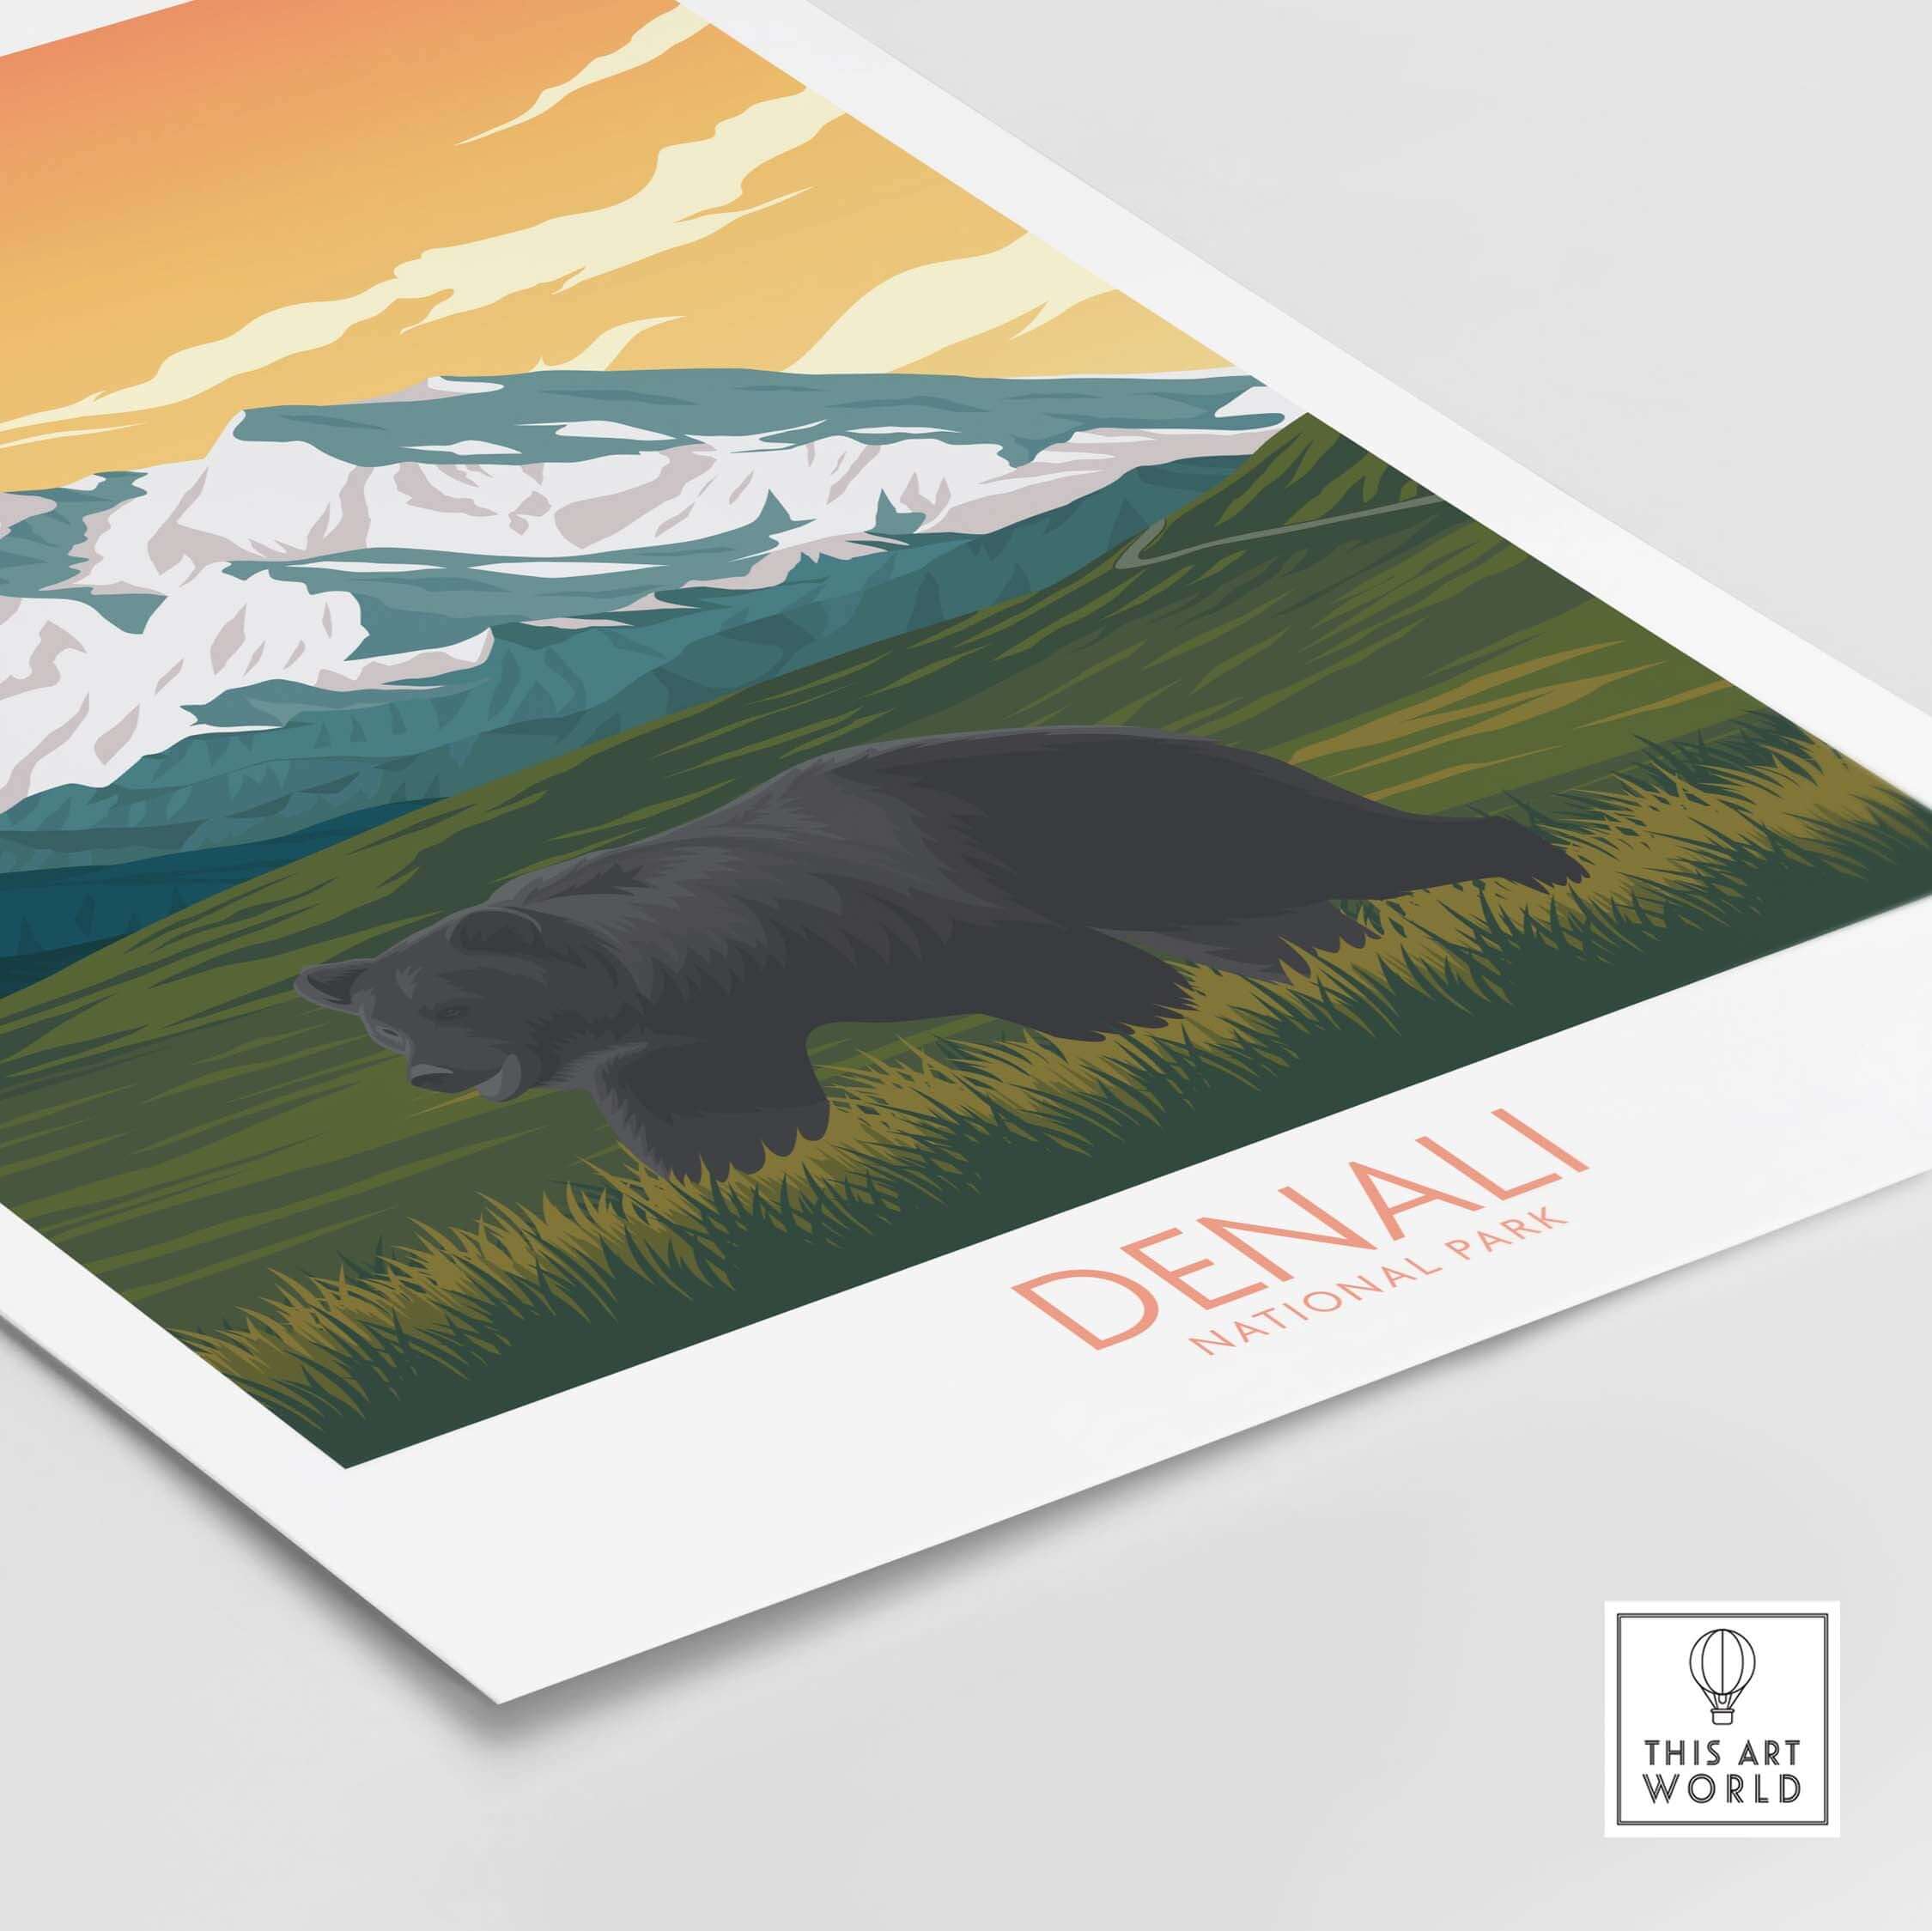 denali national park poster | art print